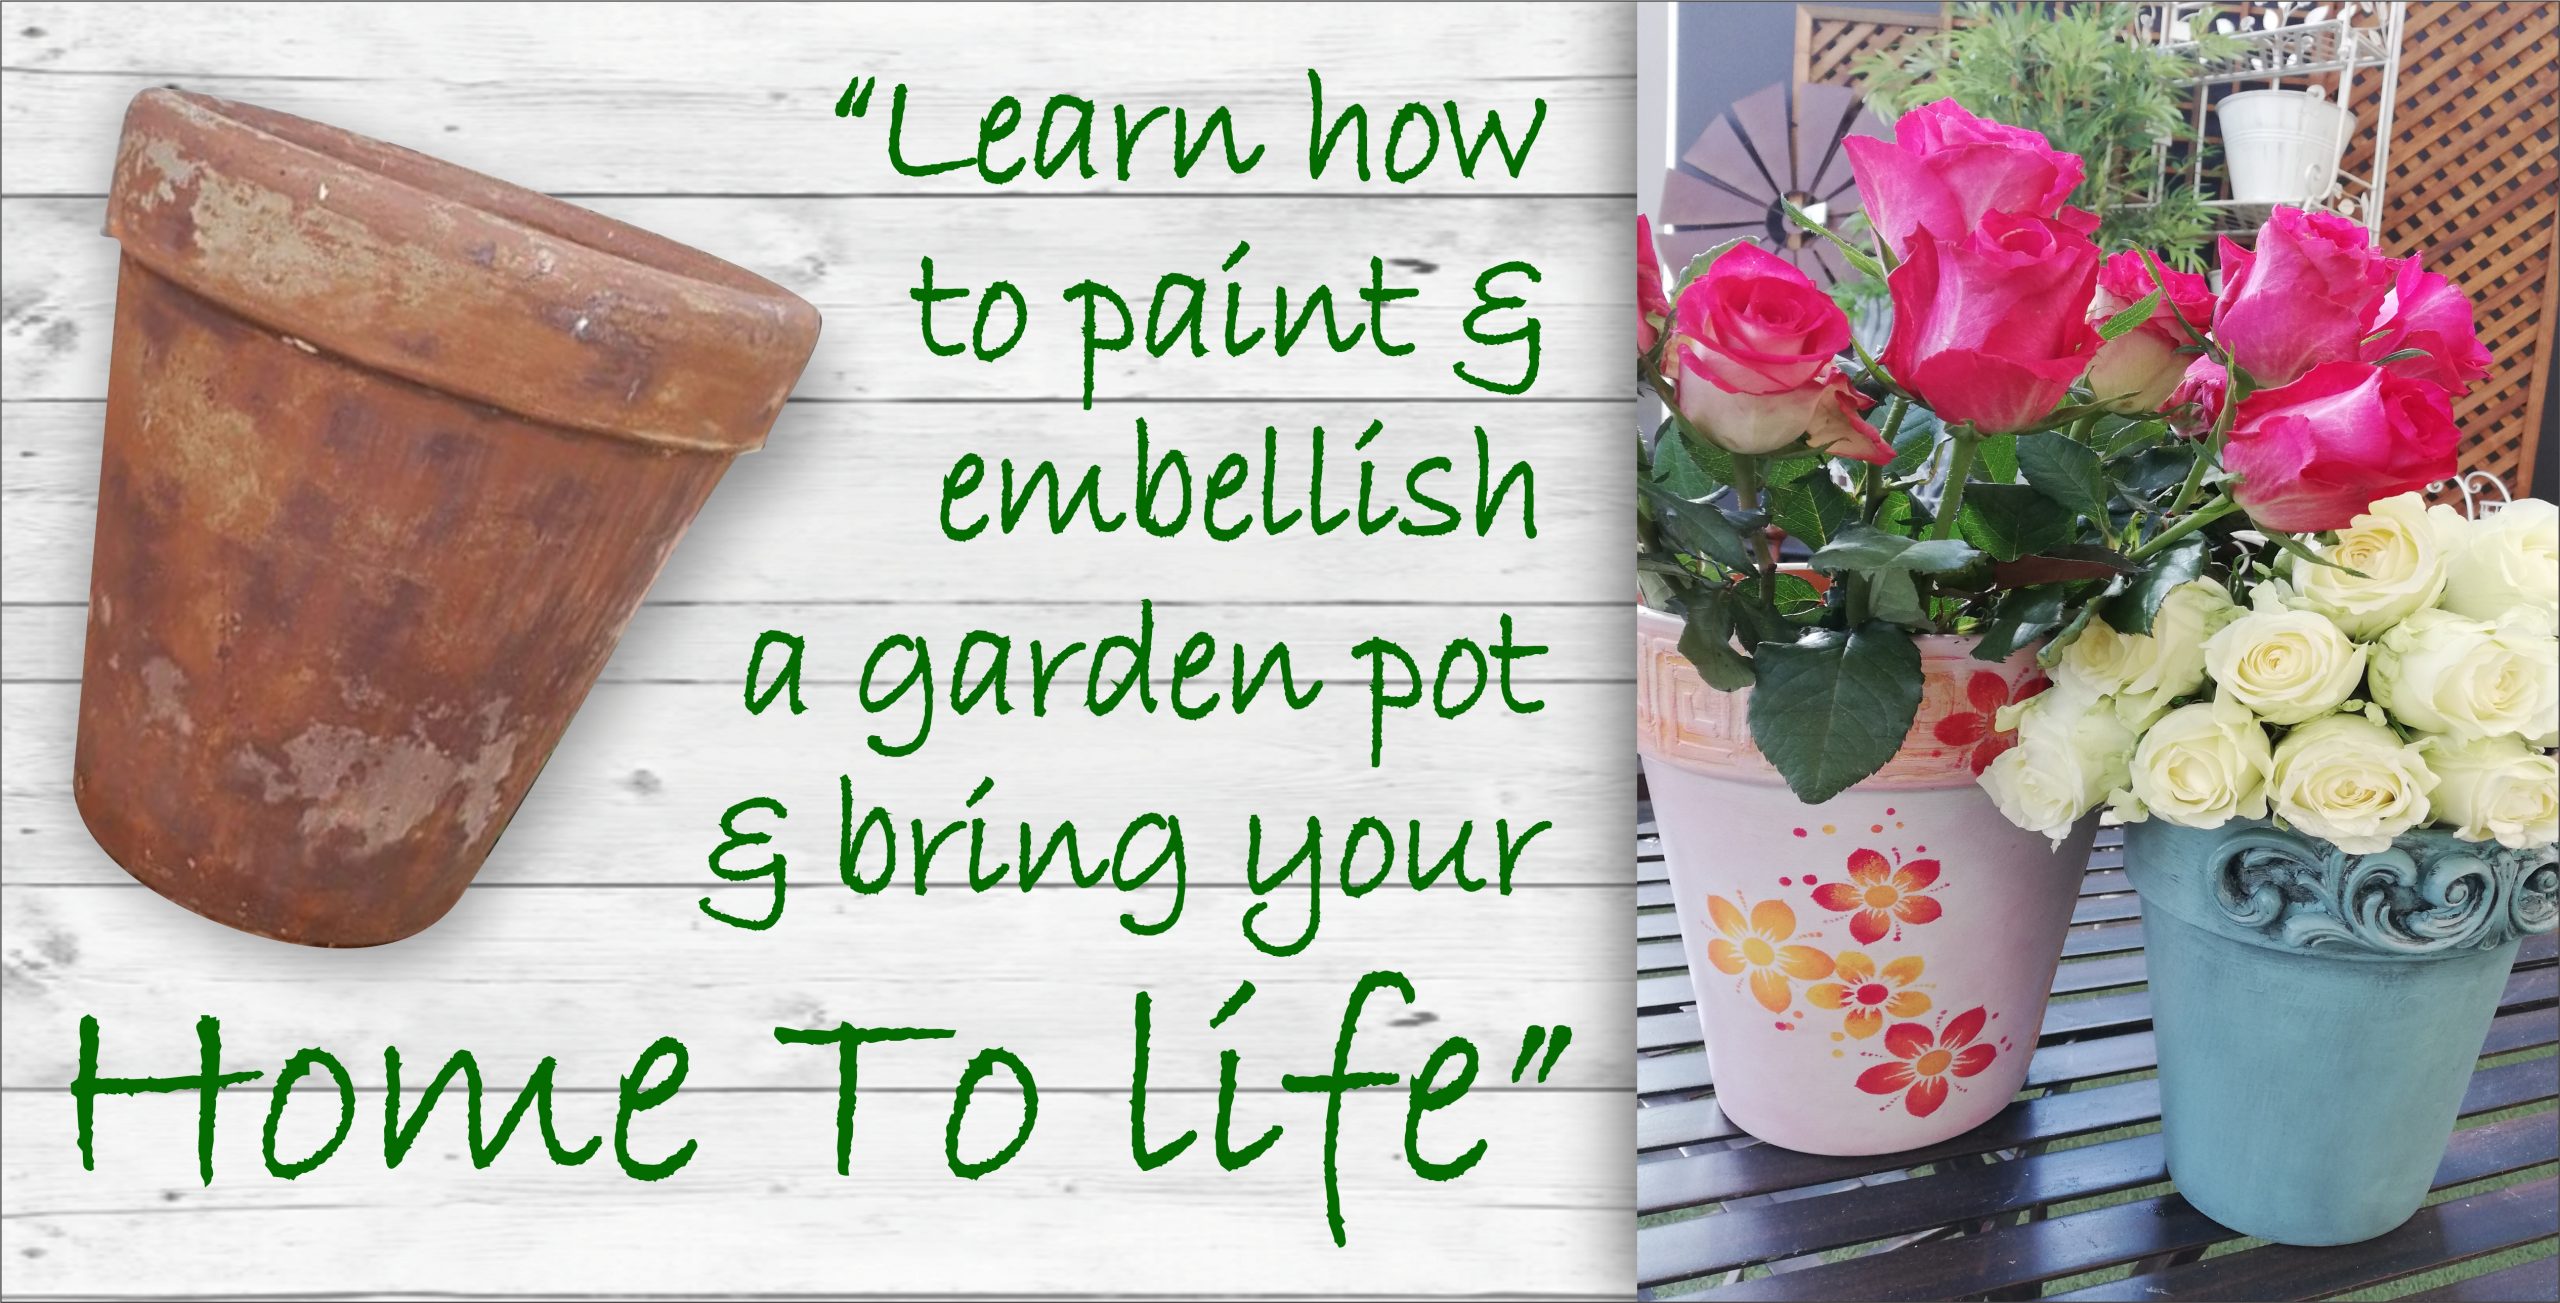 Learn How to paint a garden pot